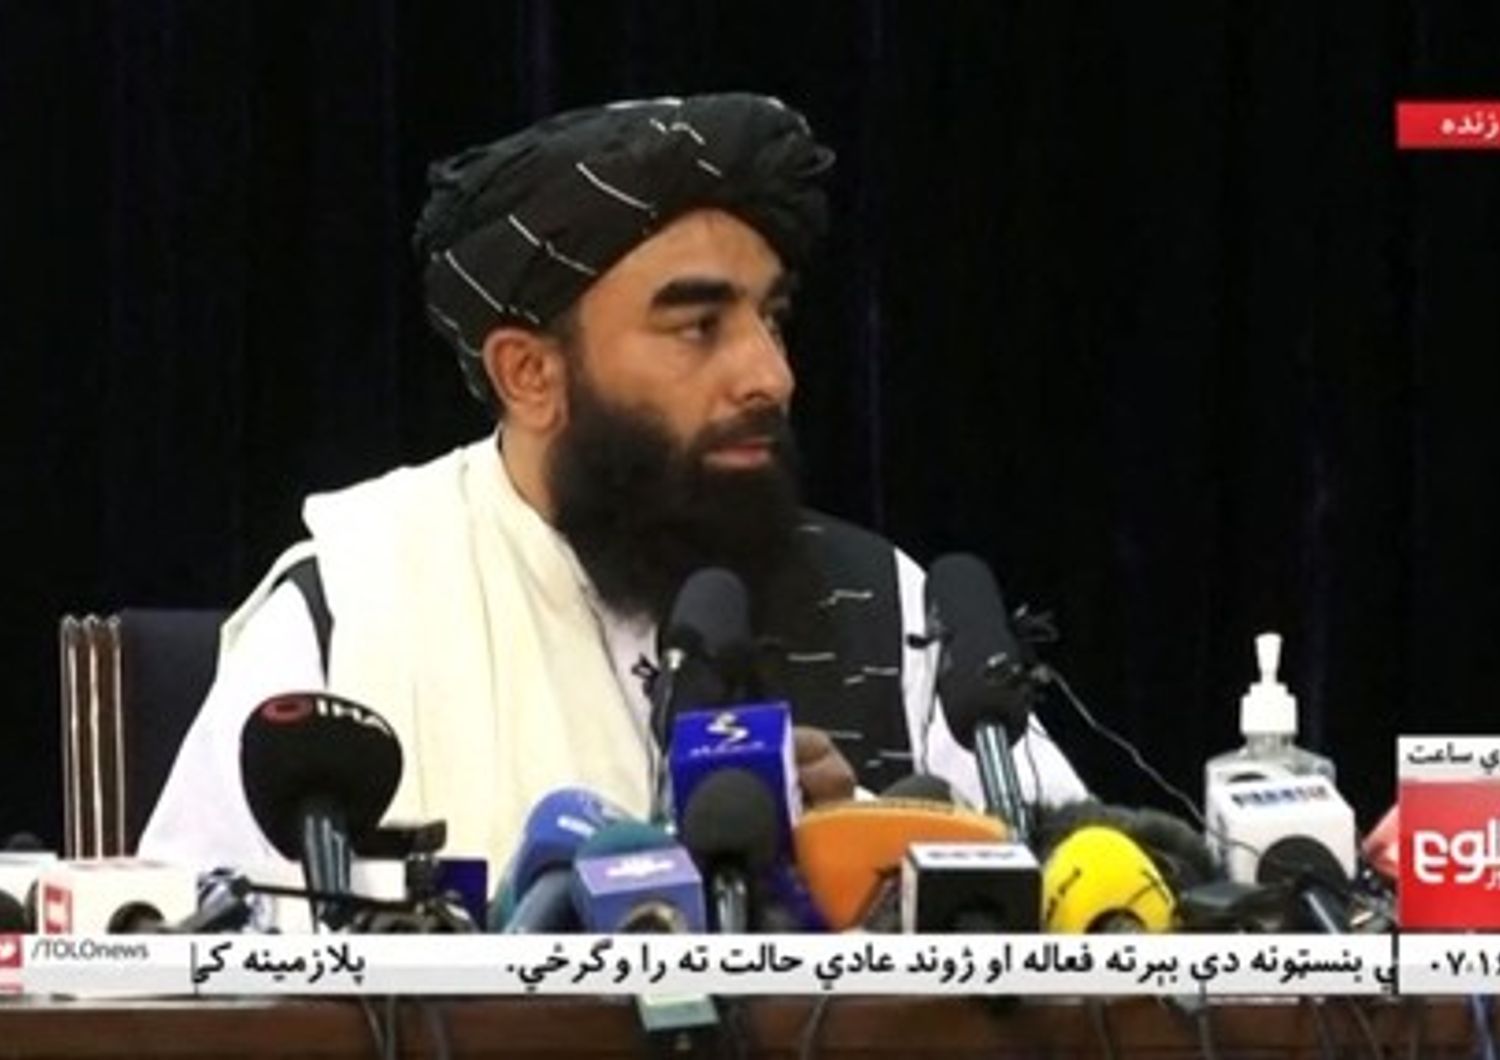 Conferenza stampa dei talebani a Kabul